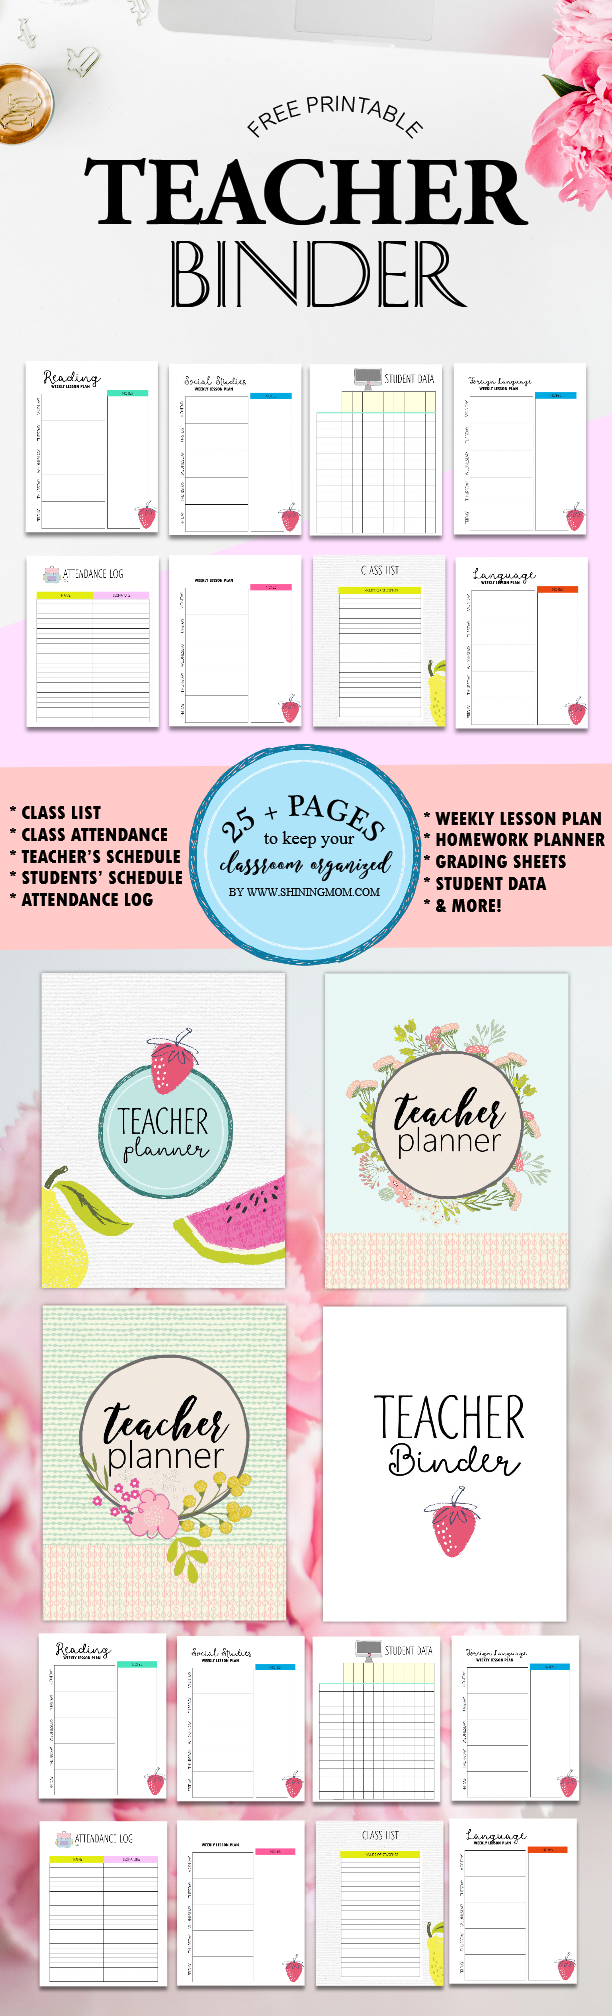 Free Teacher Binder Printables: Over 25 Pretty Planning Templates! - Free Printable Teacher Planner